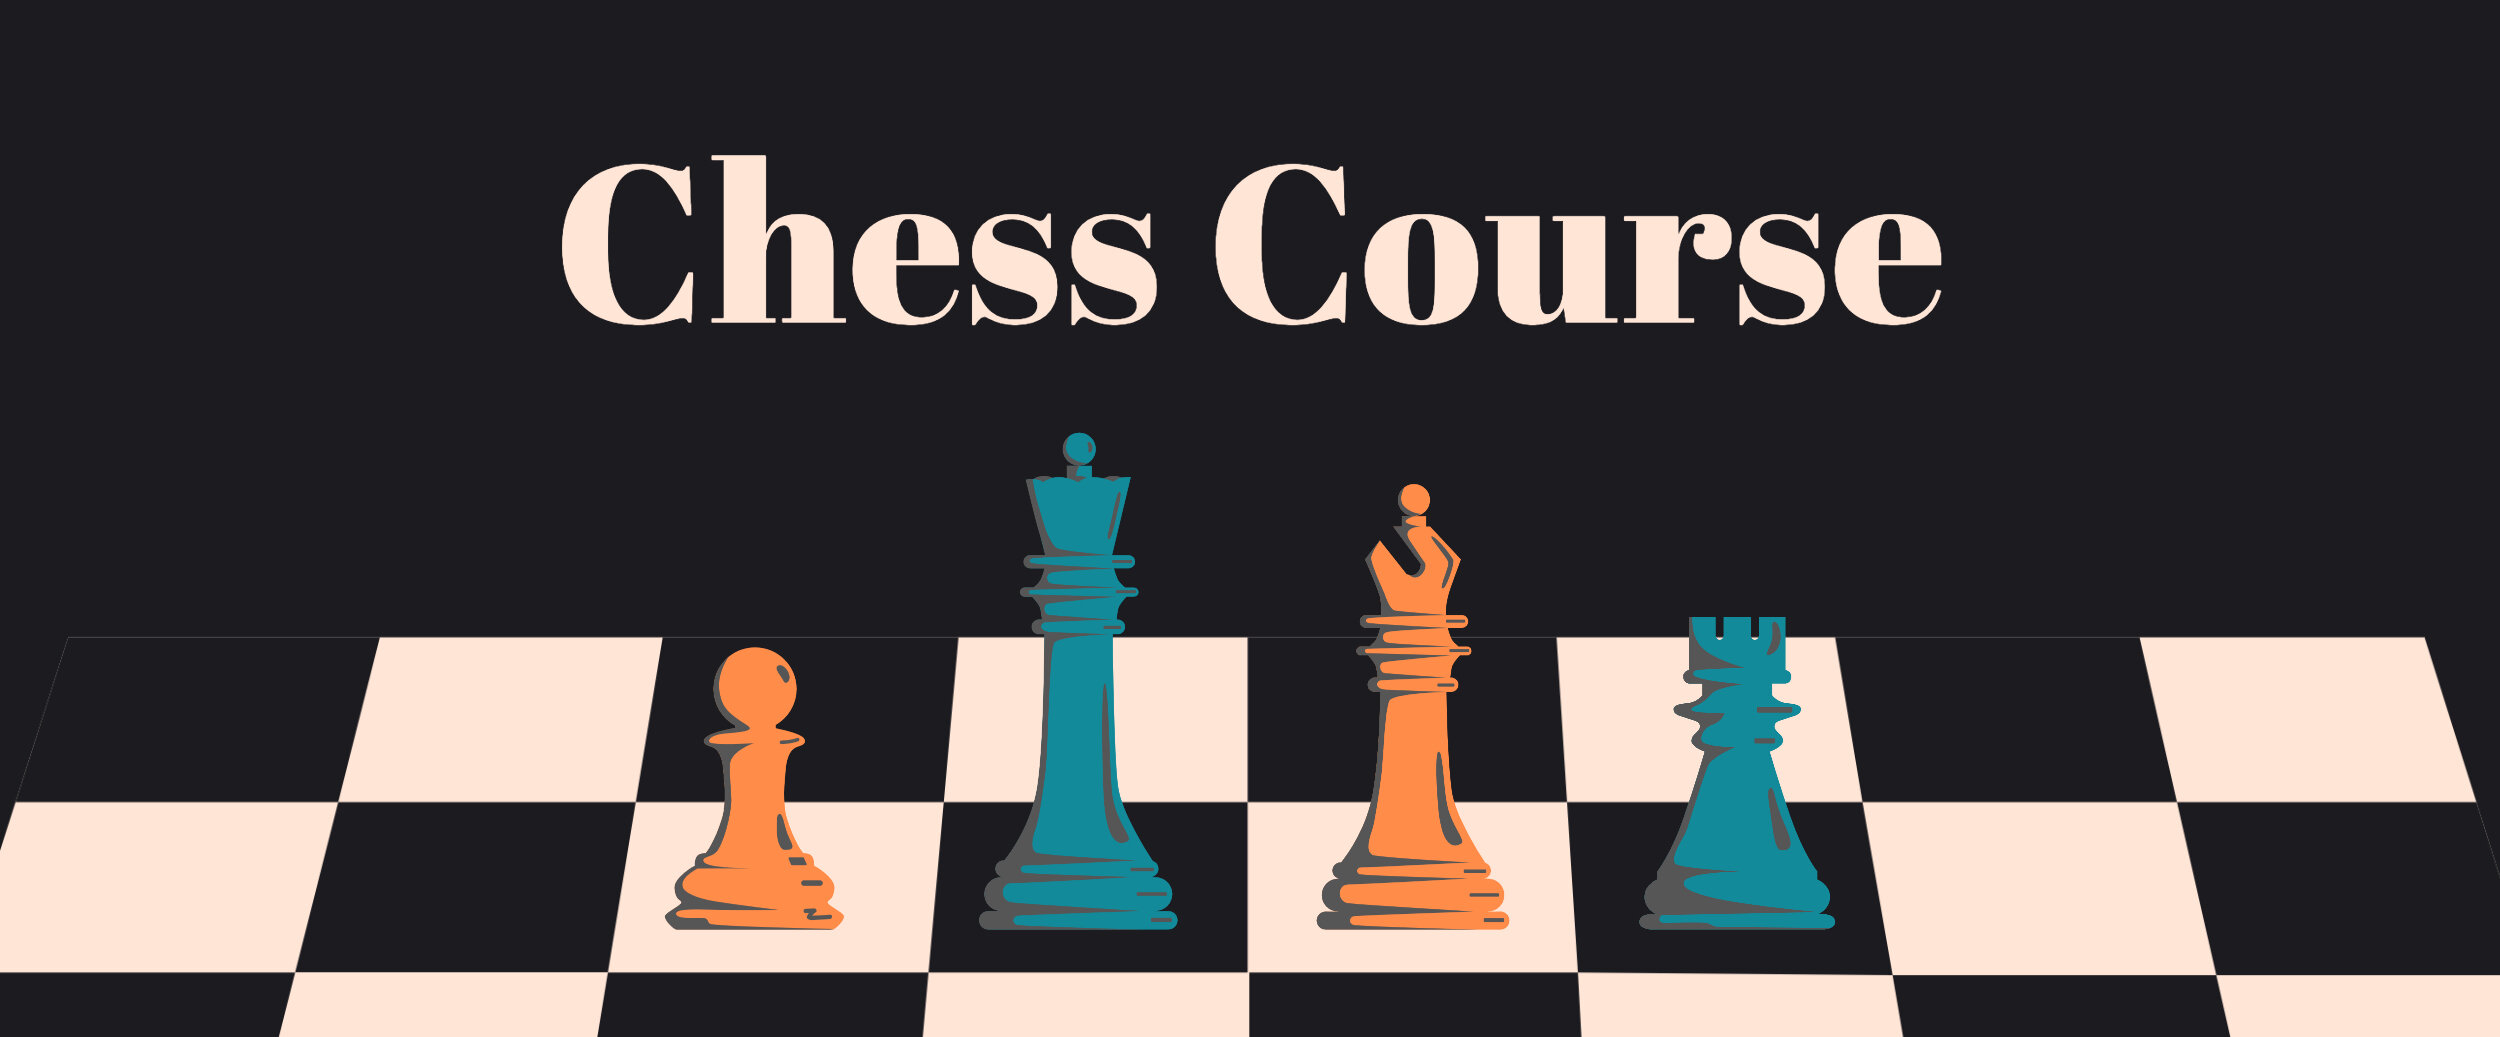 Chess Course - English — iFun Education